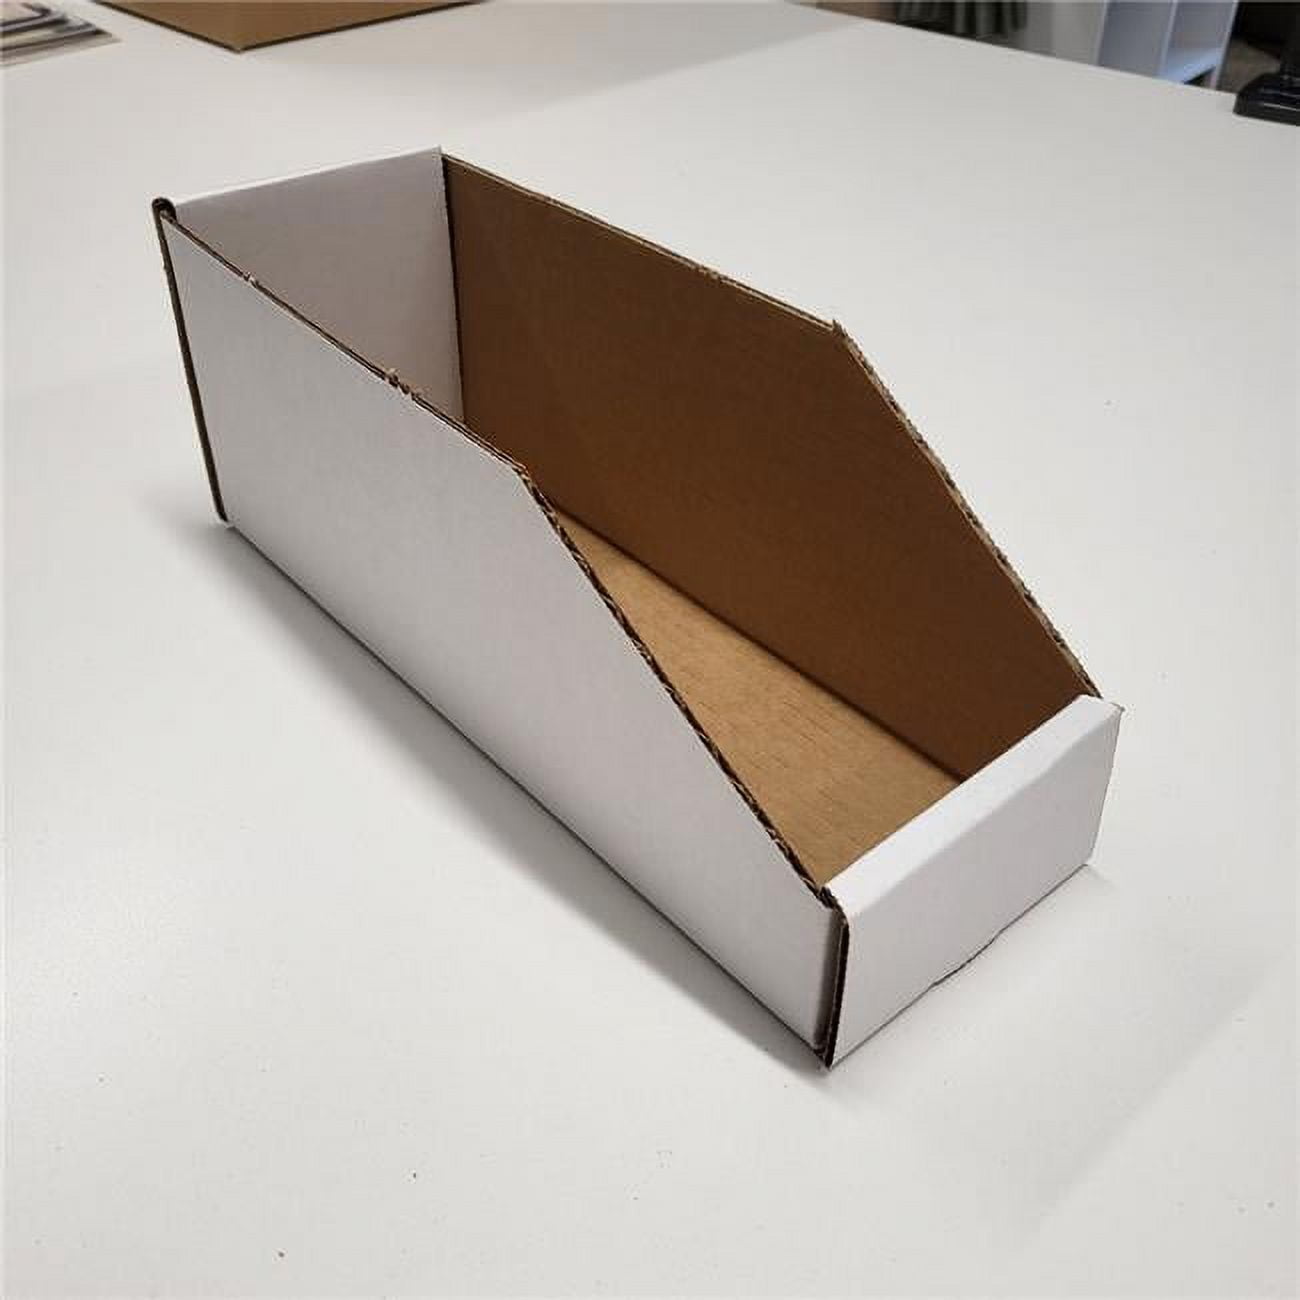 Caja Carton Octogonal N. Grande Lisa 14.5x14.5x7.5